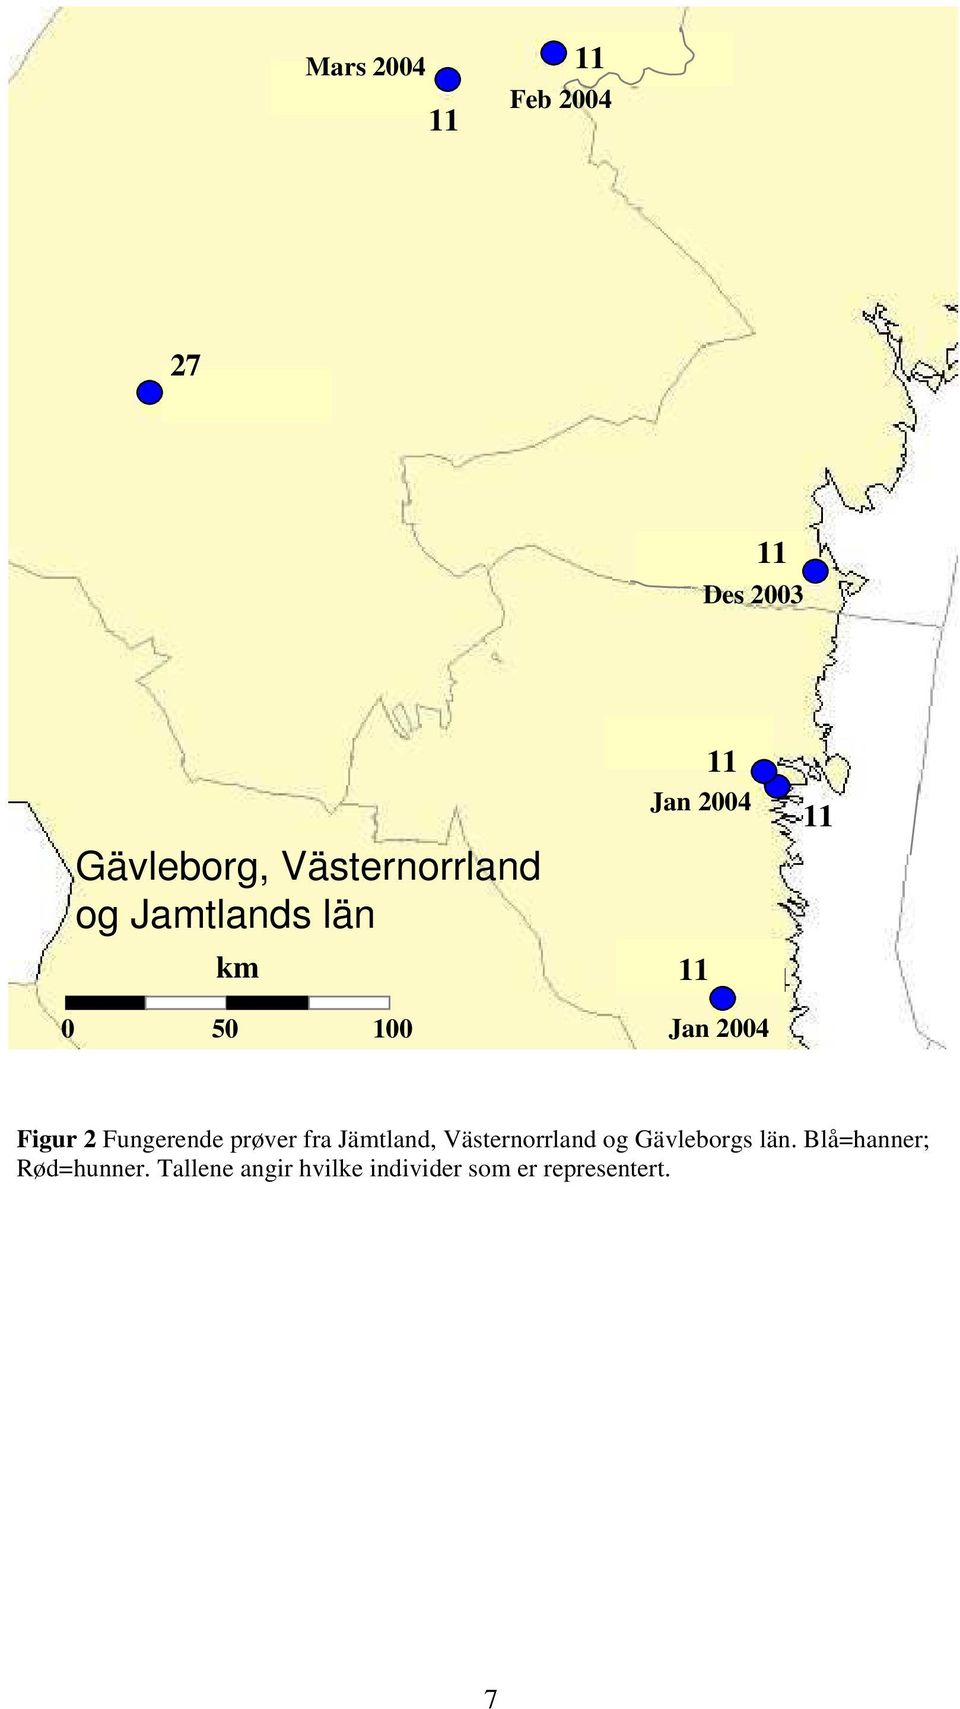 Fungerende prøver fra Jämtland, Västernorrland og Gävleborgs län.